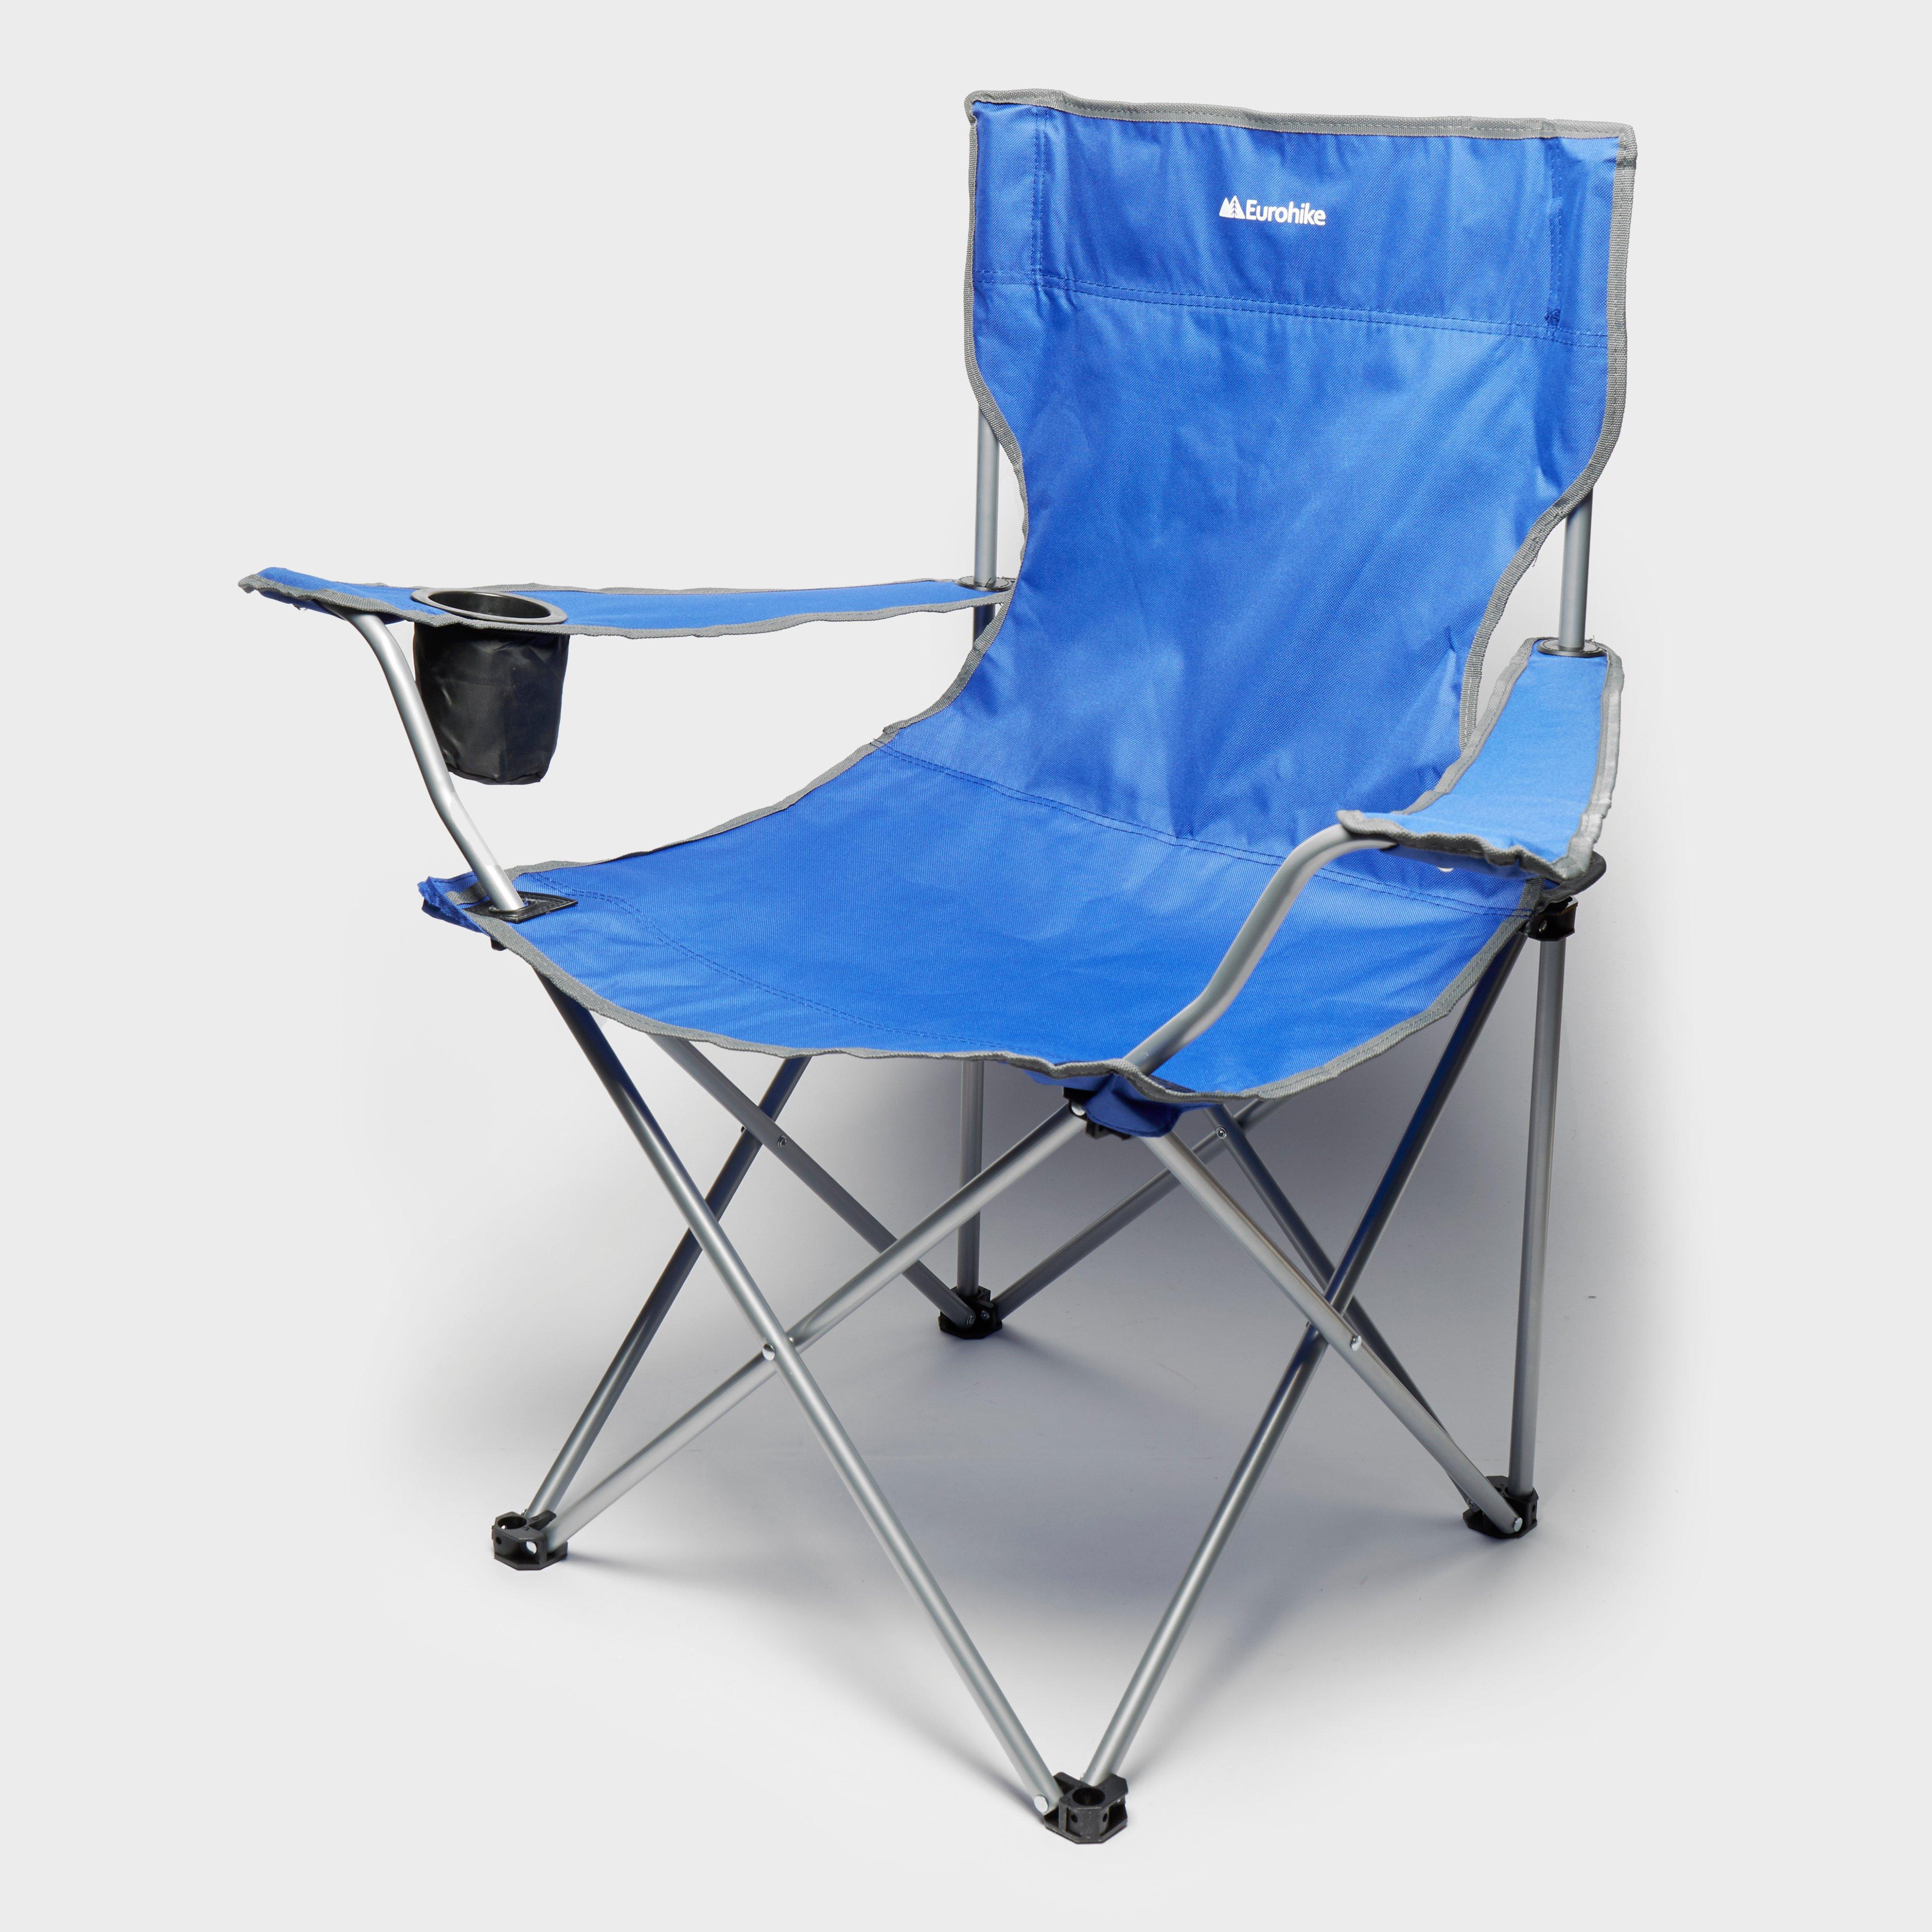 Image of Eurohike Peak Folding Chair - Blue, Blue